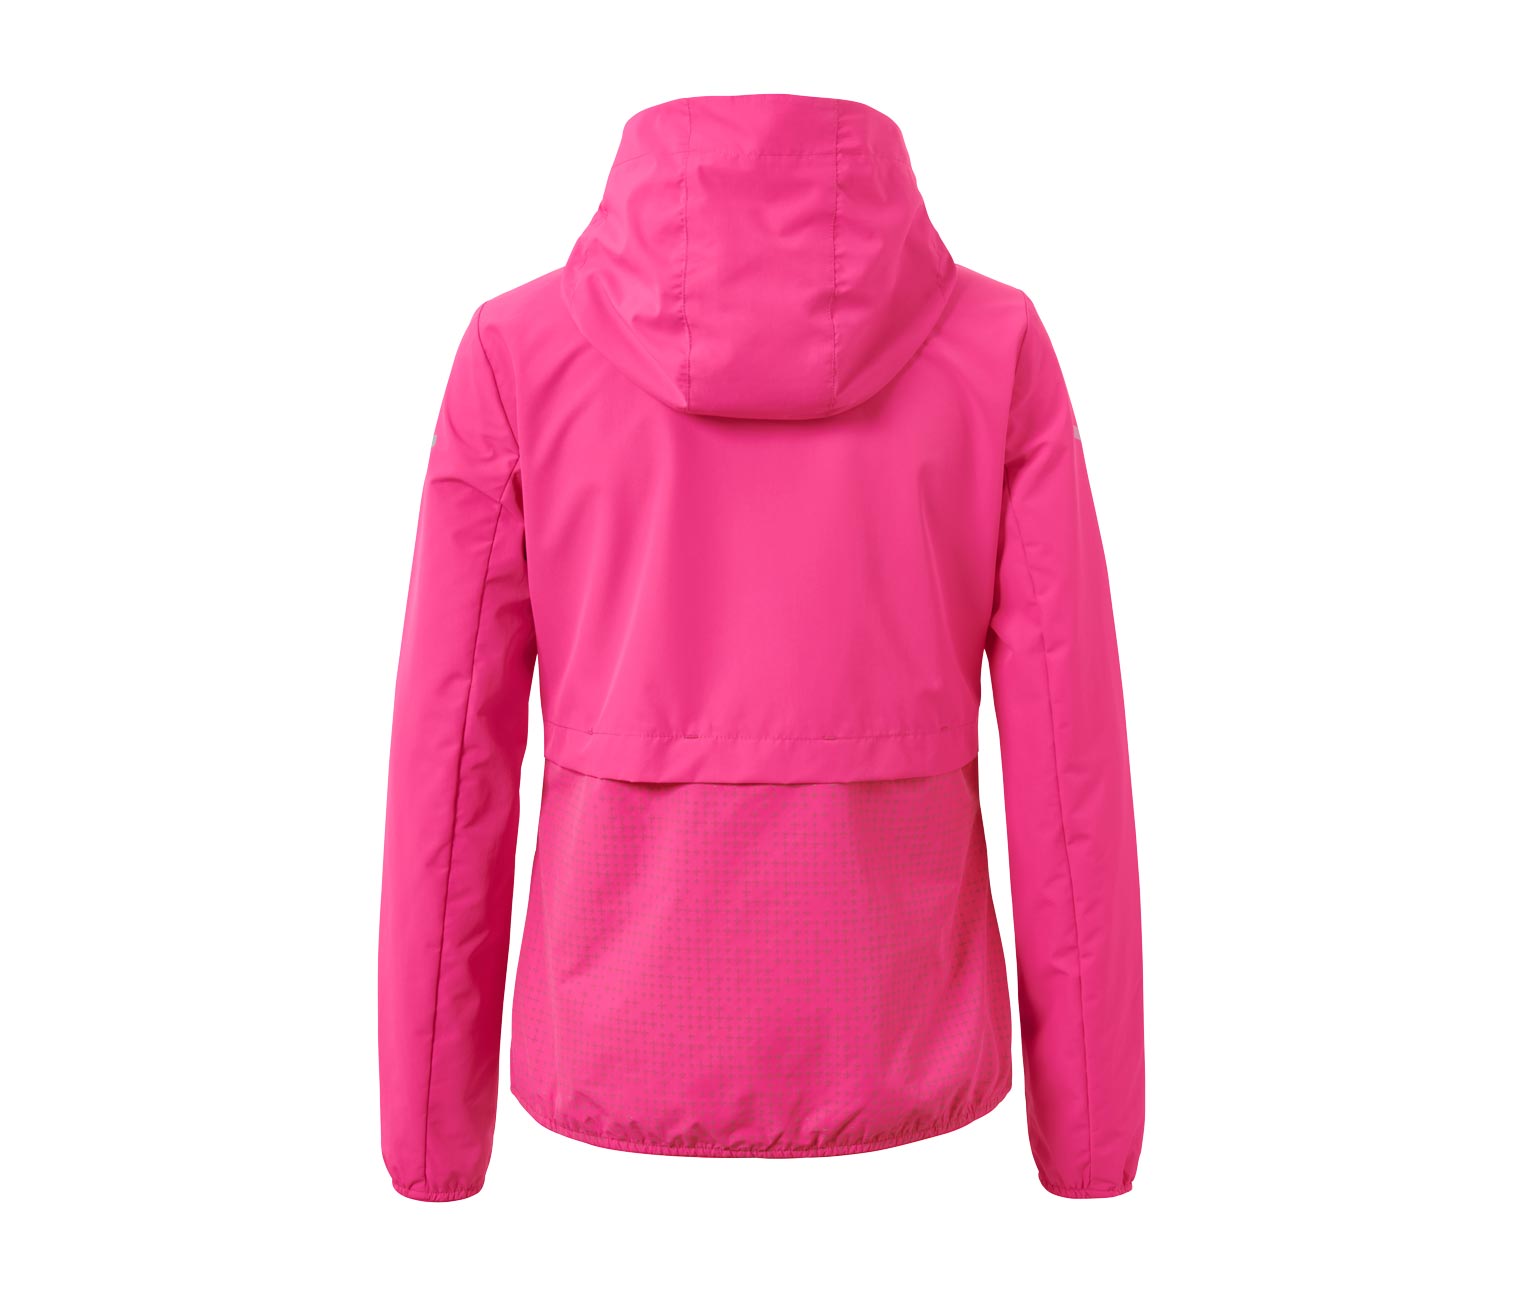 Windprotection-Laufjacke, pink online bestellen bei Tchibo 669725